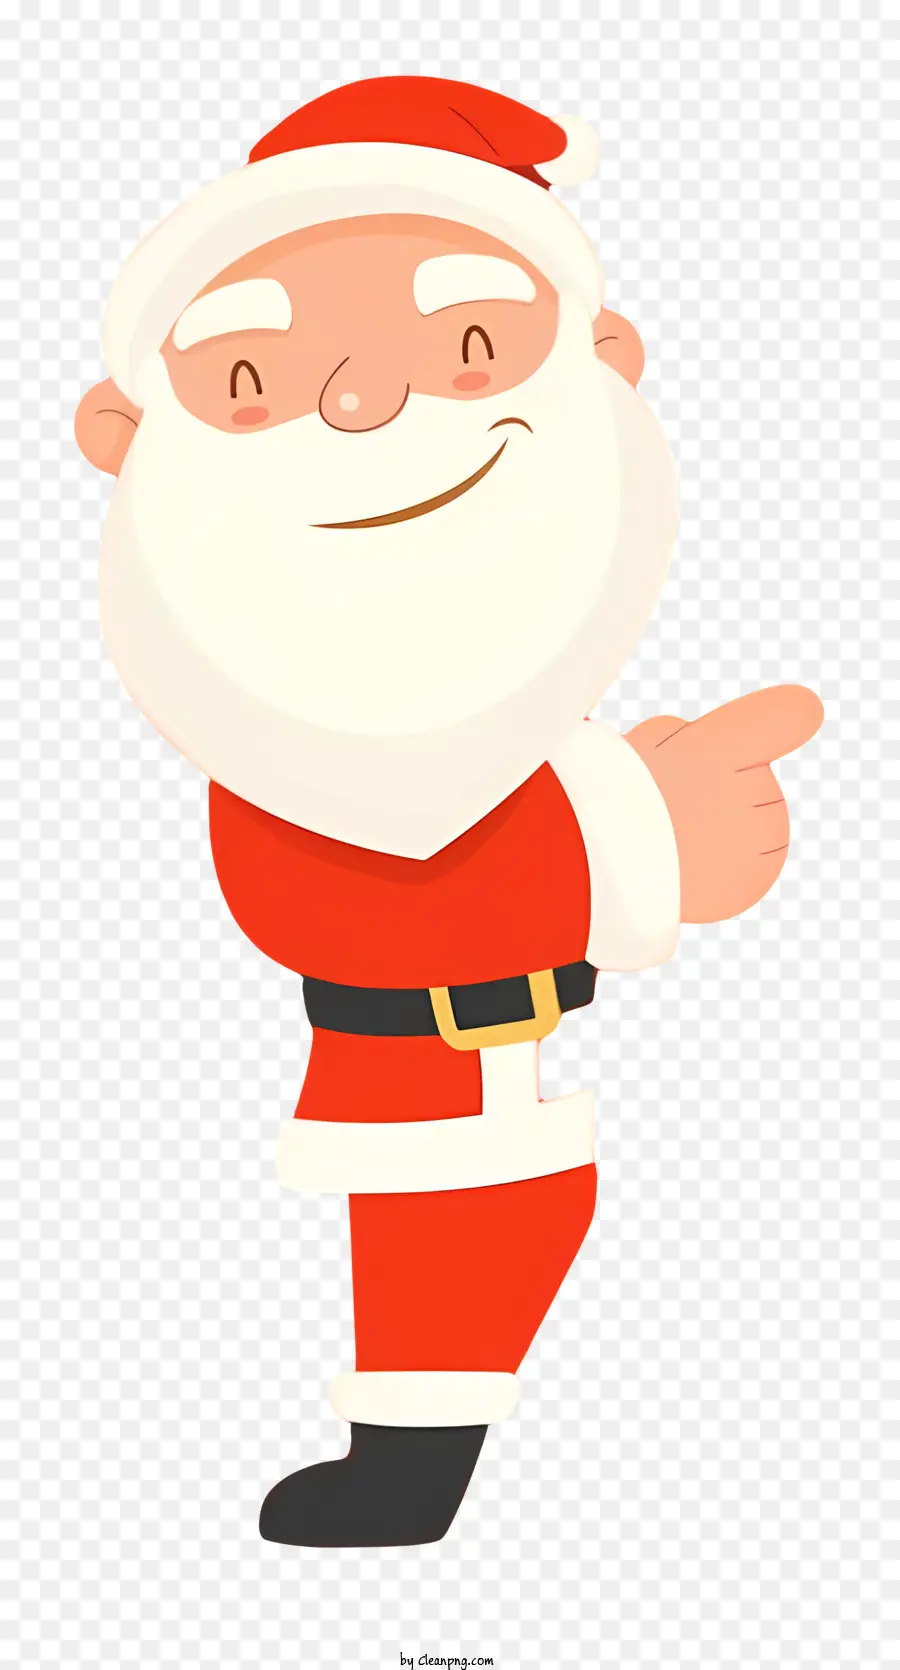 babbo natale cartoon - Cartoon Babbo Natale che punta su sfondo nero